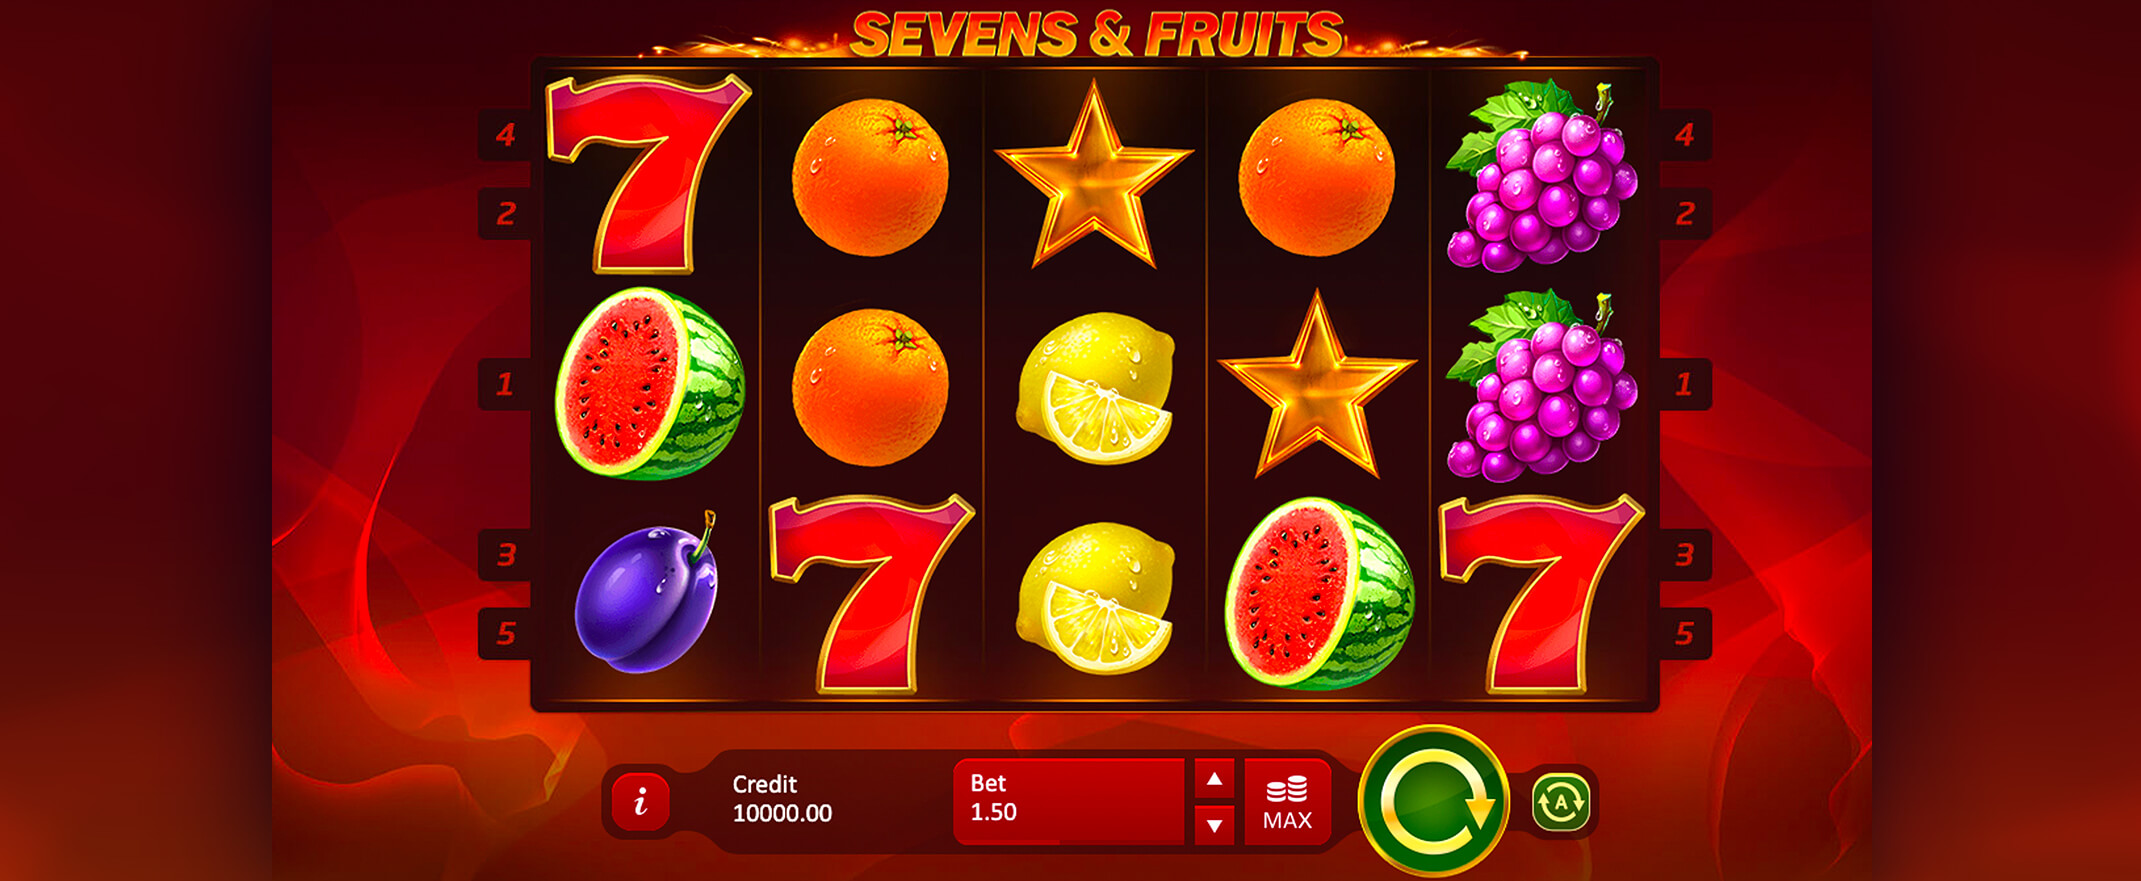 Sevens & Fruits: 6 Reels Slot Screenshot